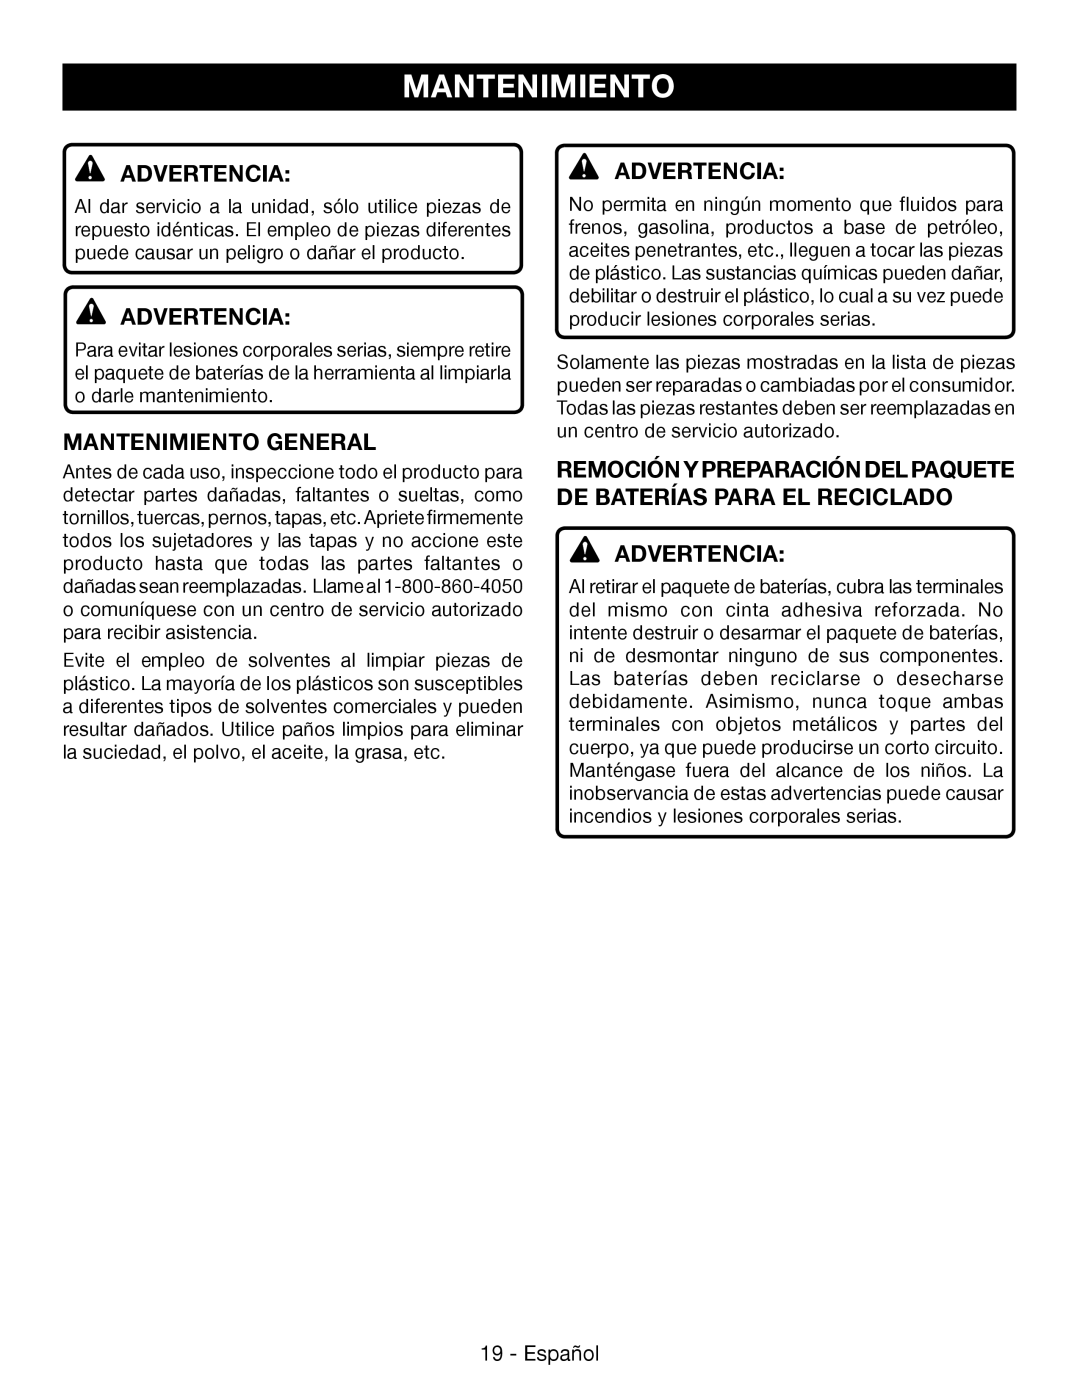 Ryobi P545 manuel dutilisation Mantenimiento General, Advertencia 